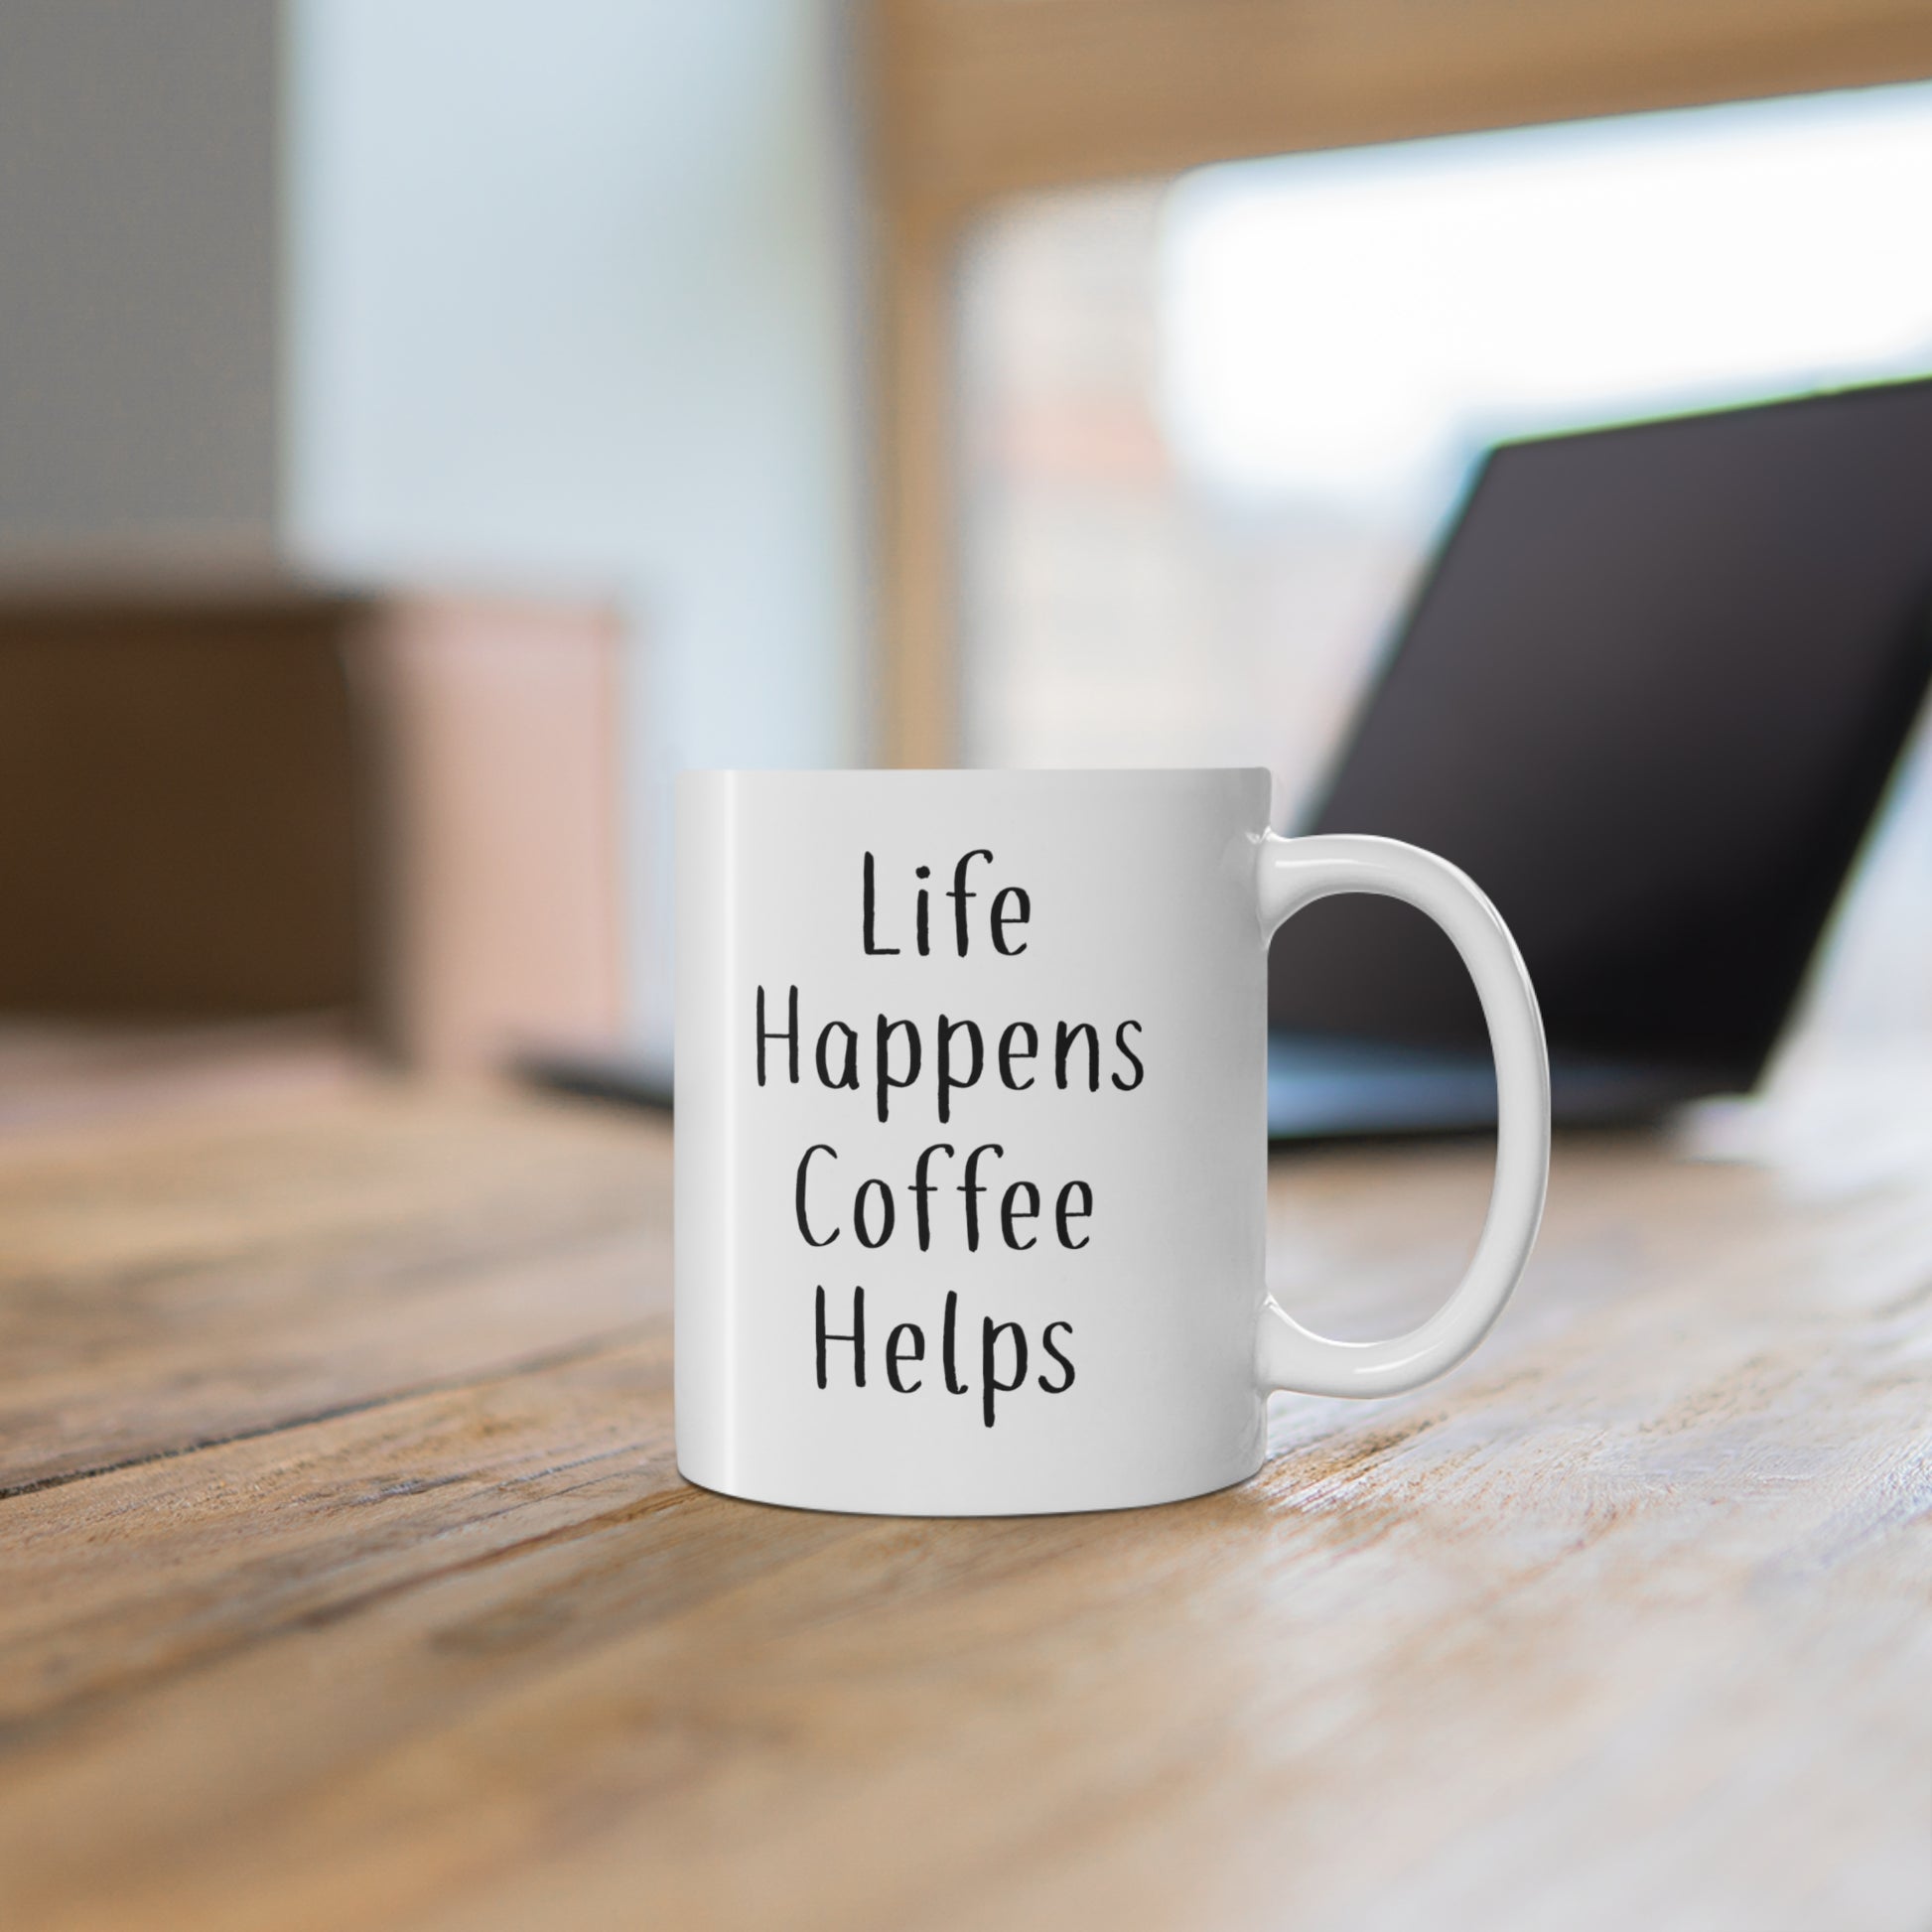 11oz ceramic mug with quote Life Happens Coffee Helps